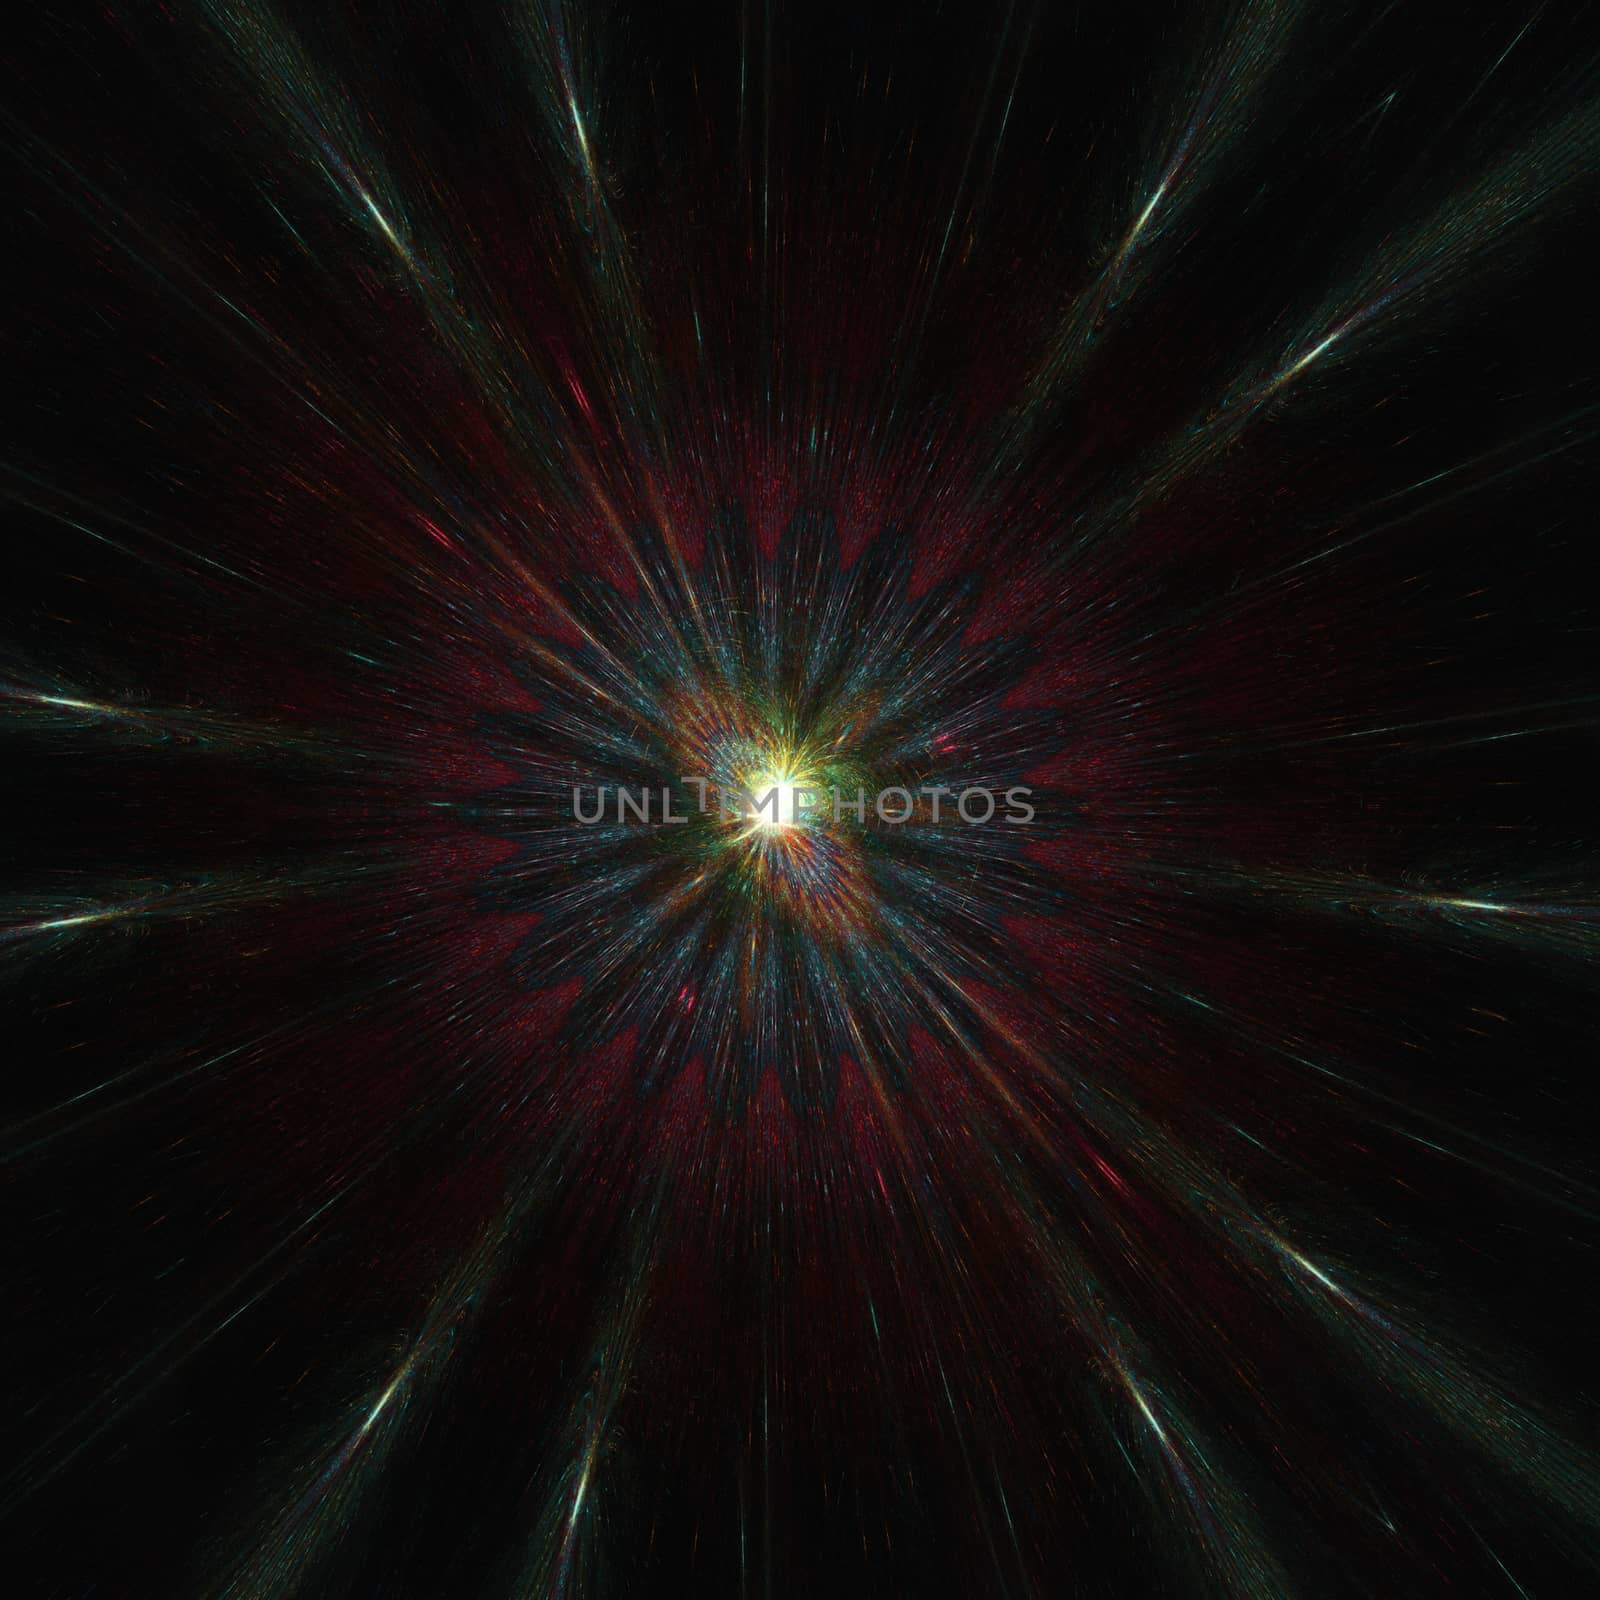 Digital Illustration of a Supernova